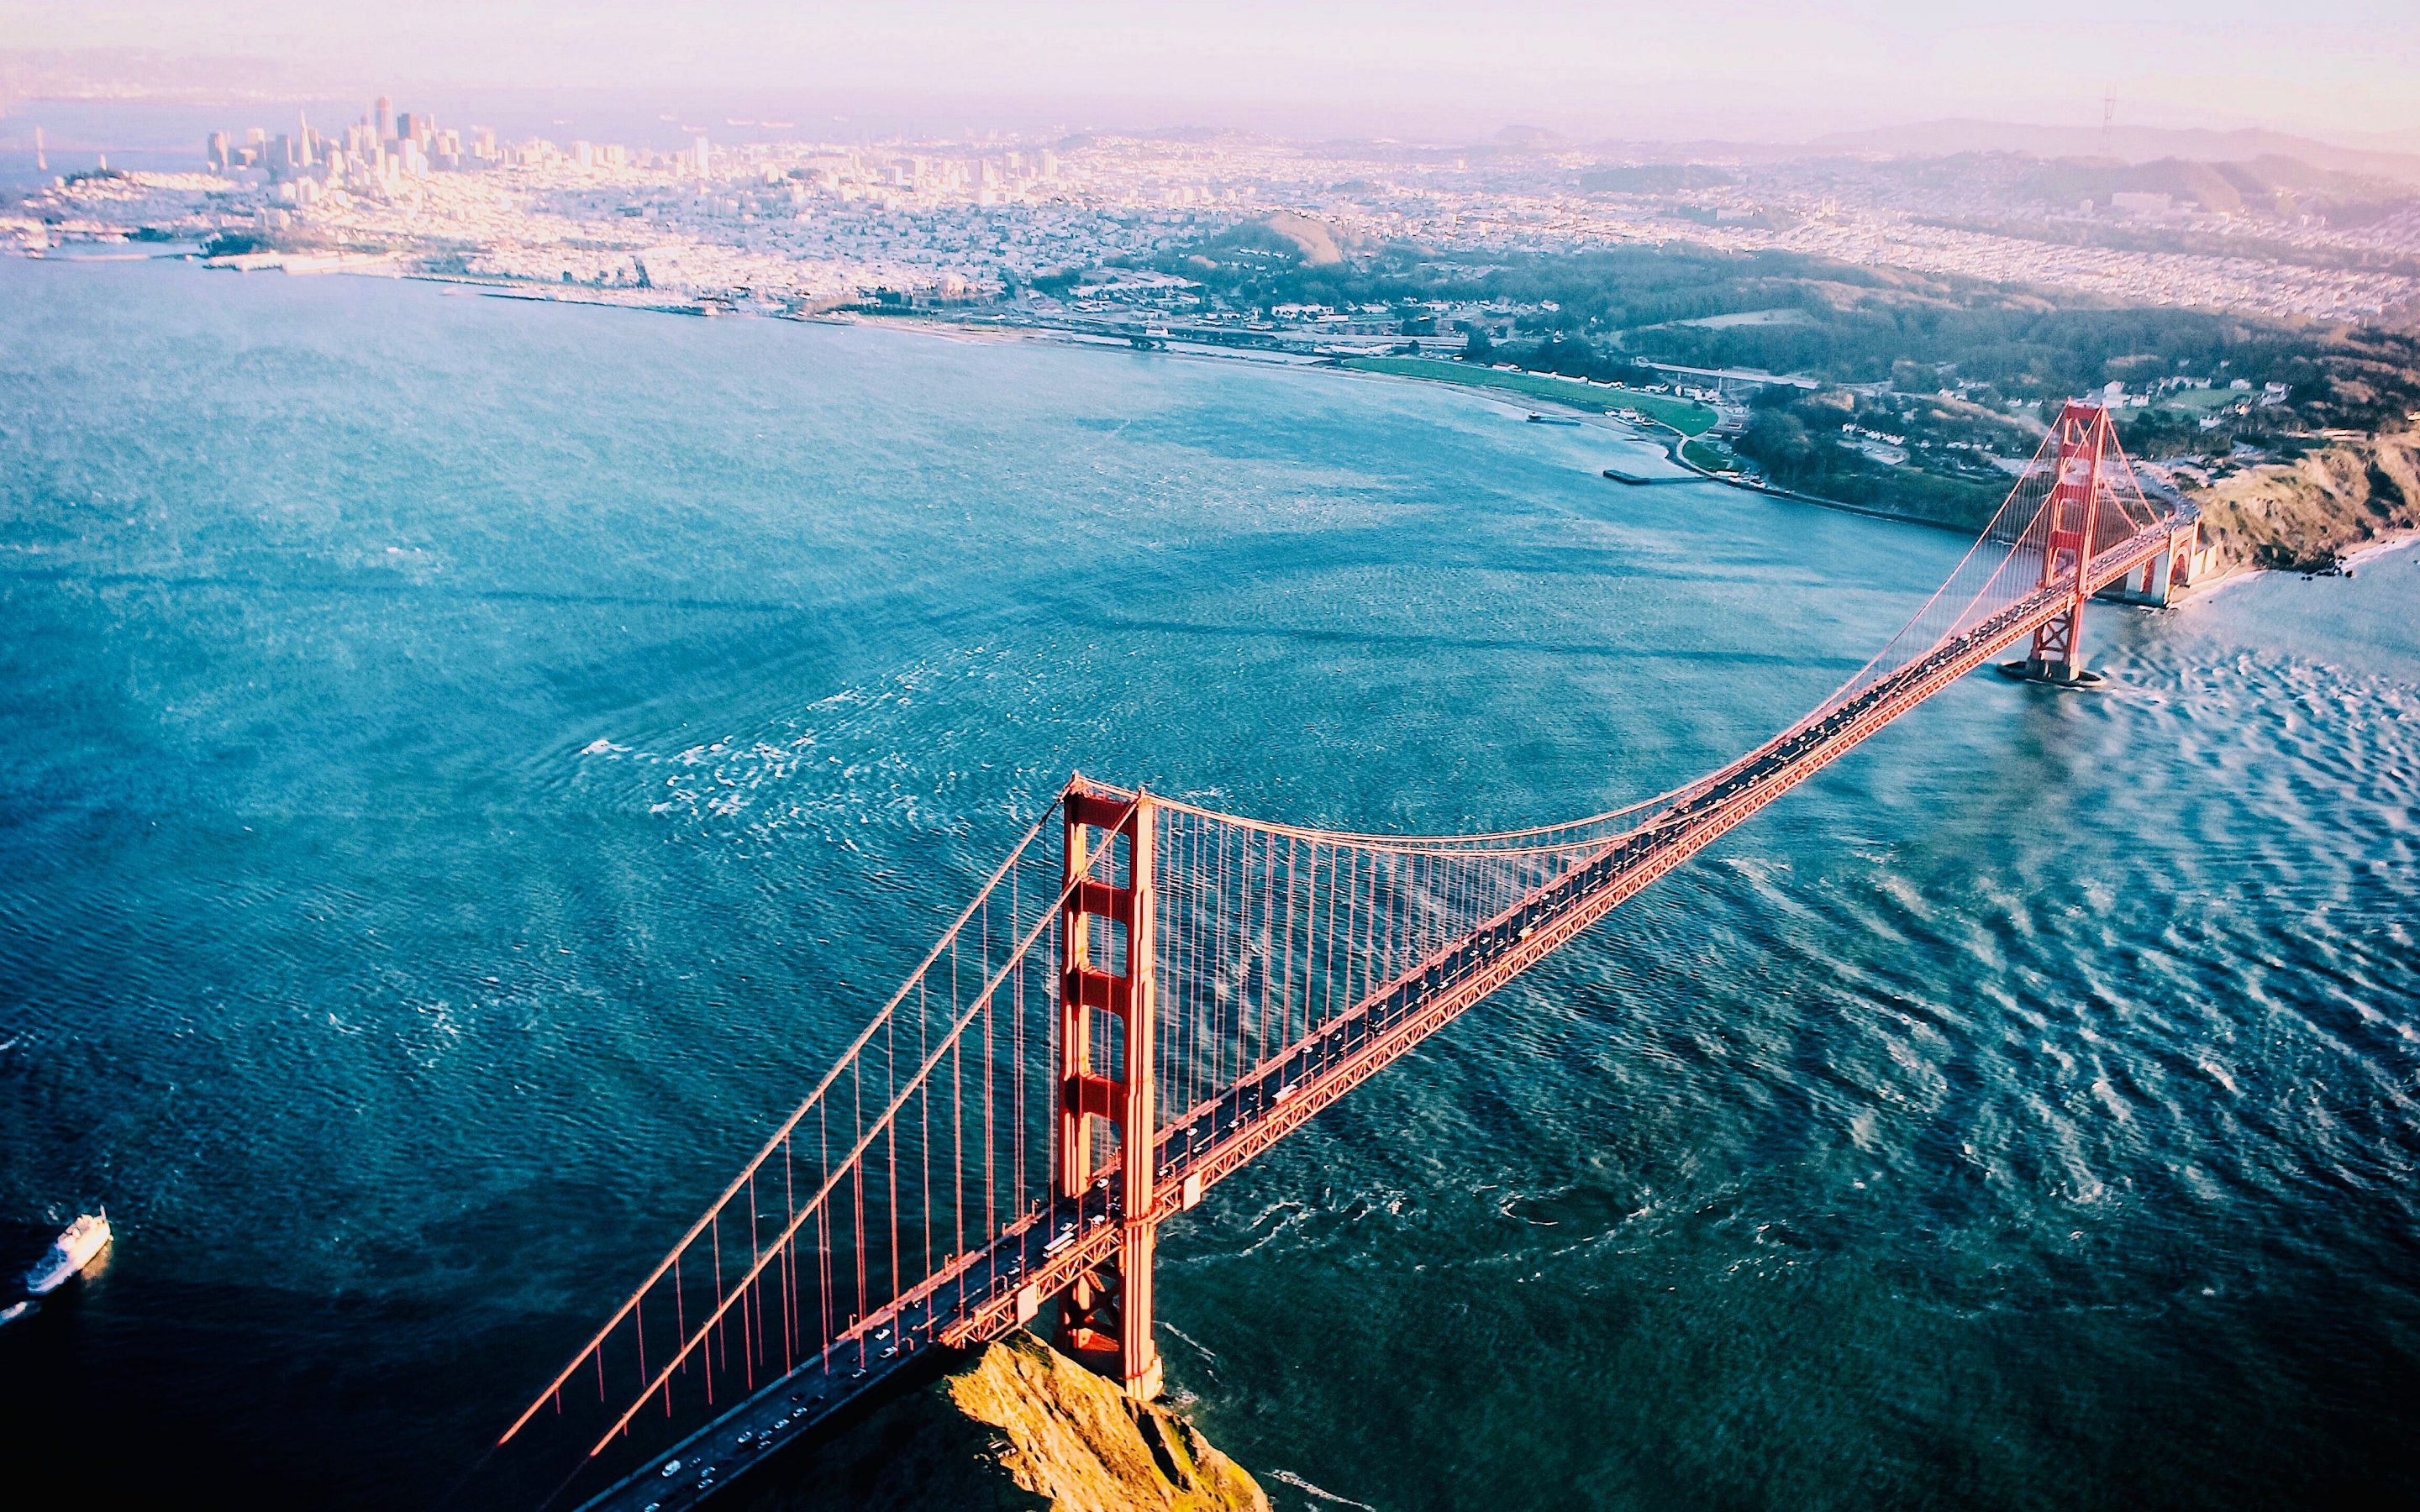 CNNTravel.com- “10 secrets of the Golden Gate Bridge”